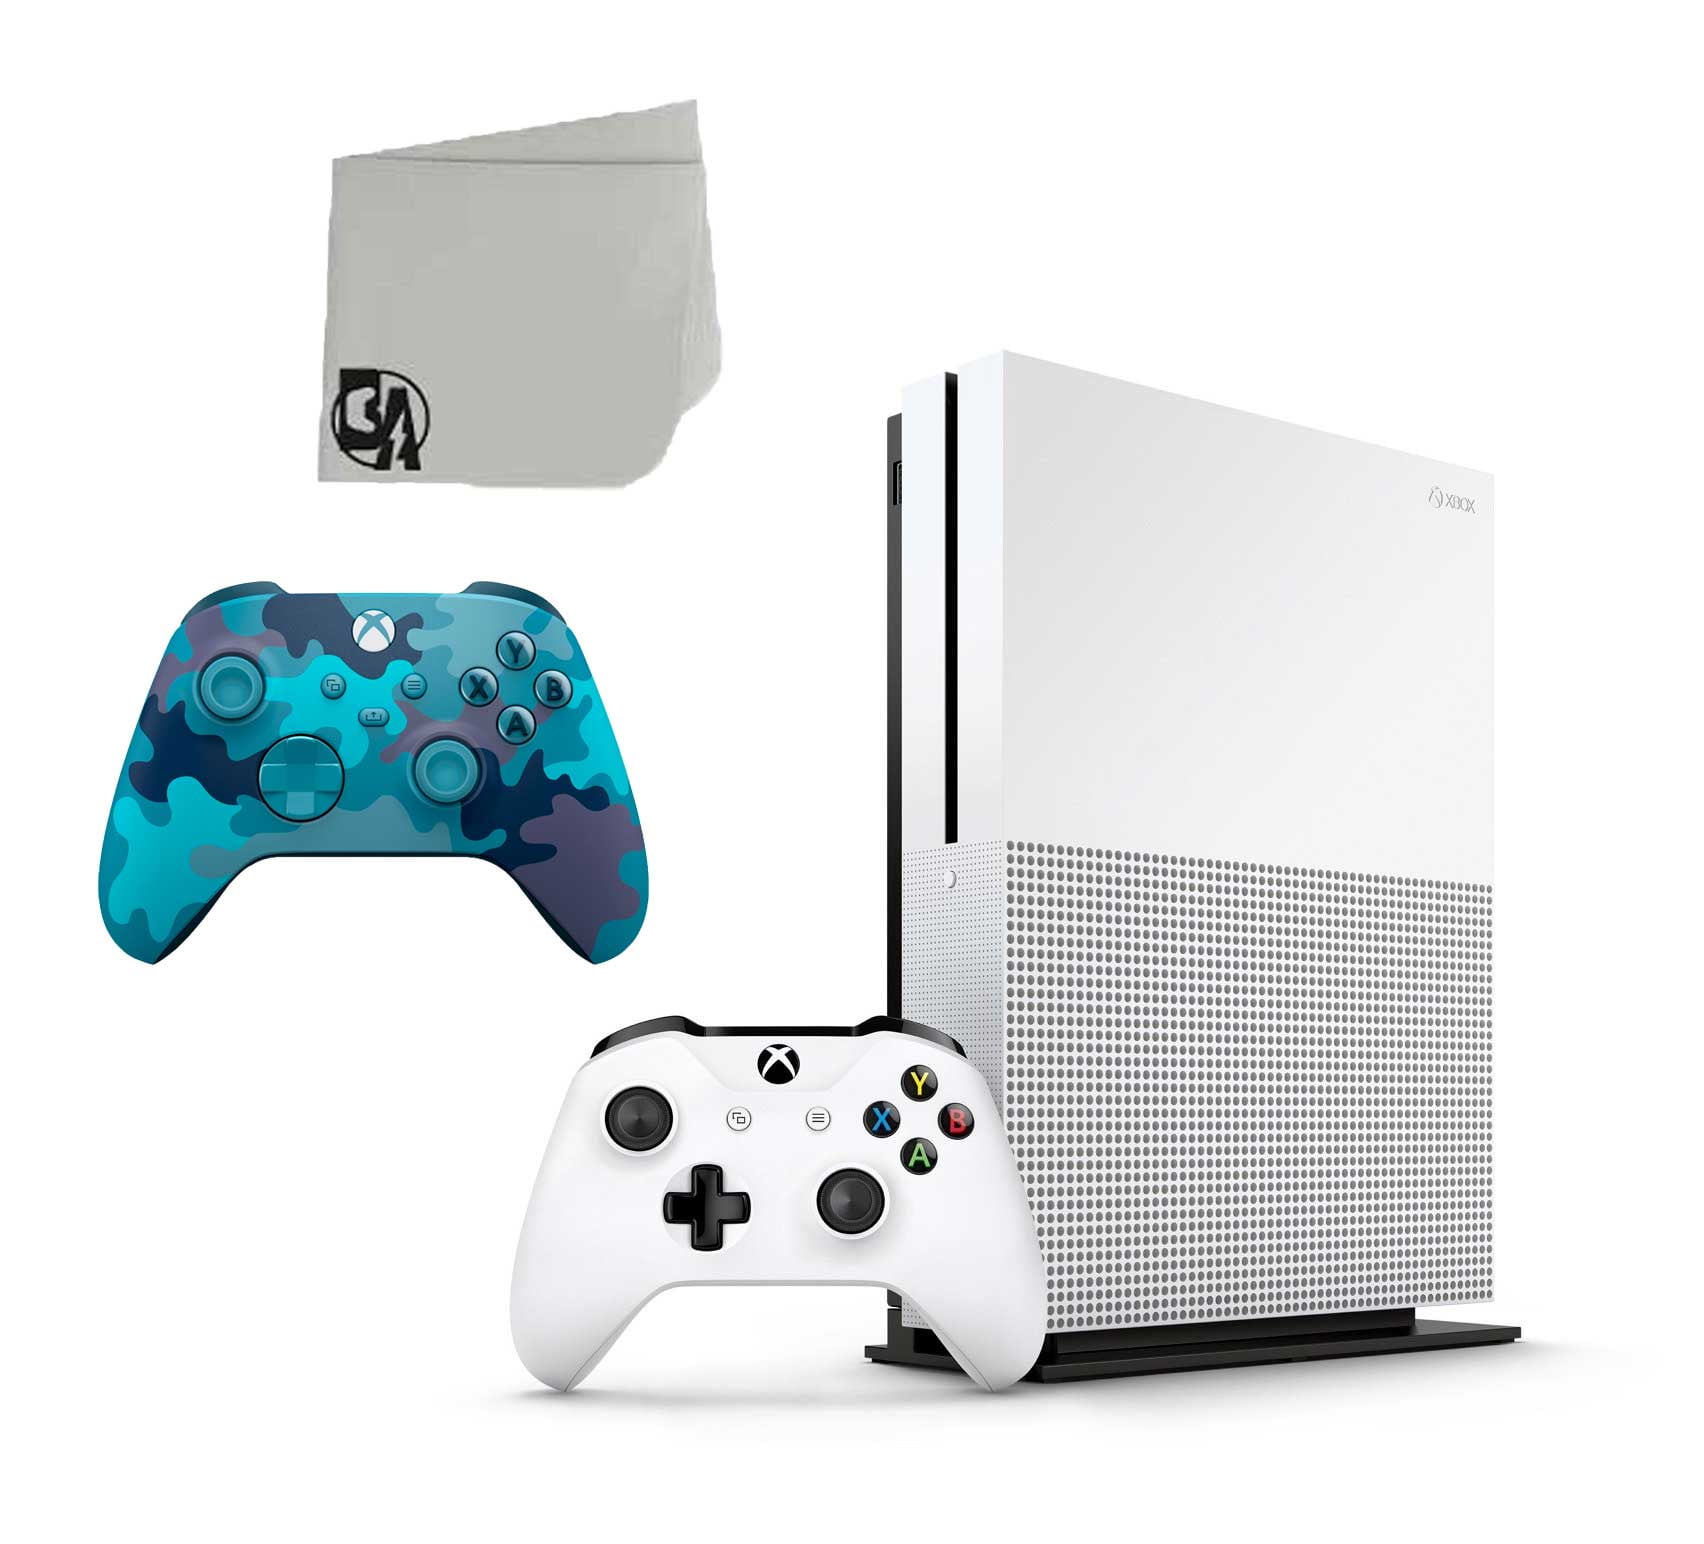 Microsoft Xbox One S 500GB Console Model 1681 White + 1 Controller + 2  Games